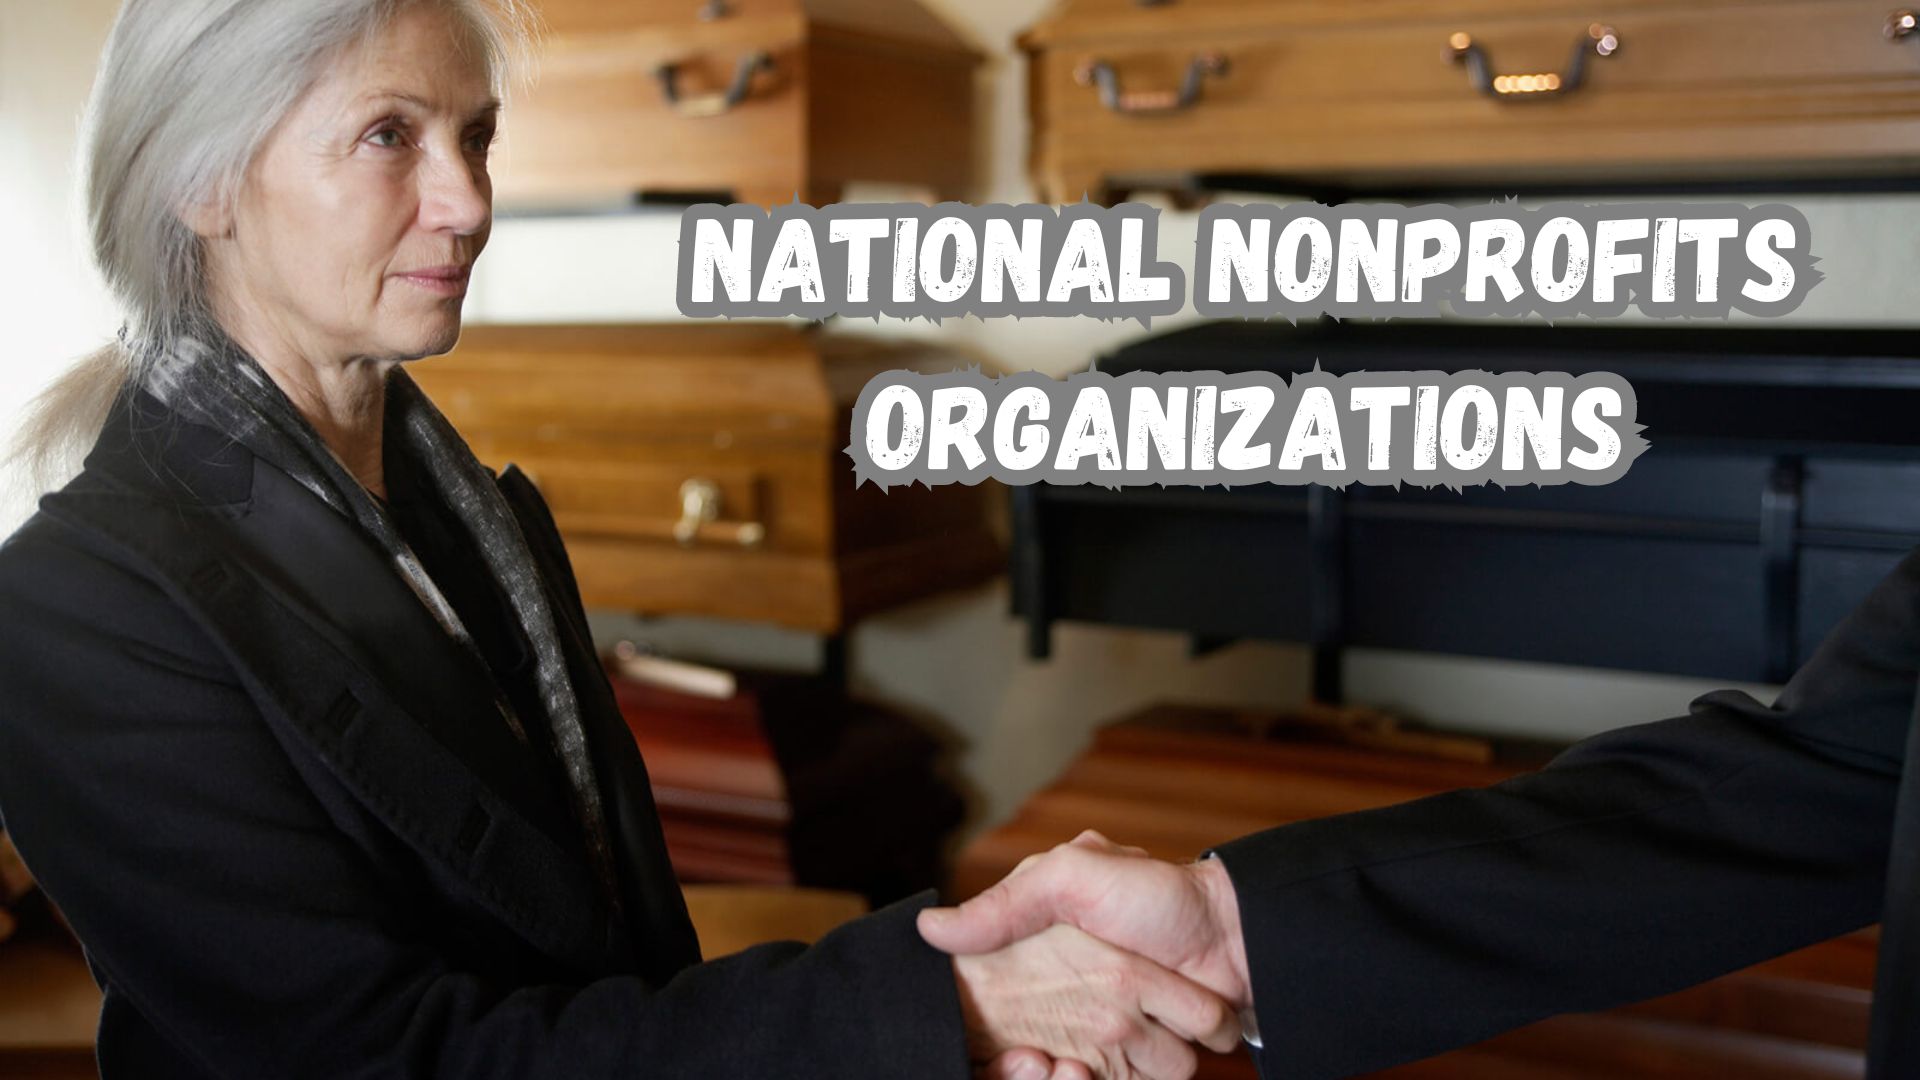 National Nonprofits Organizations.